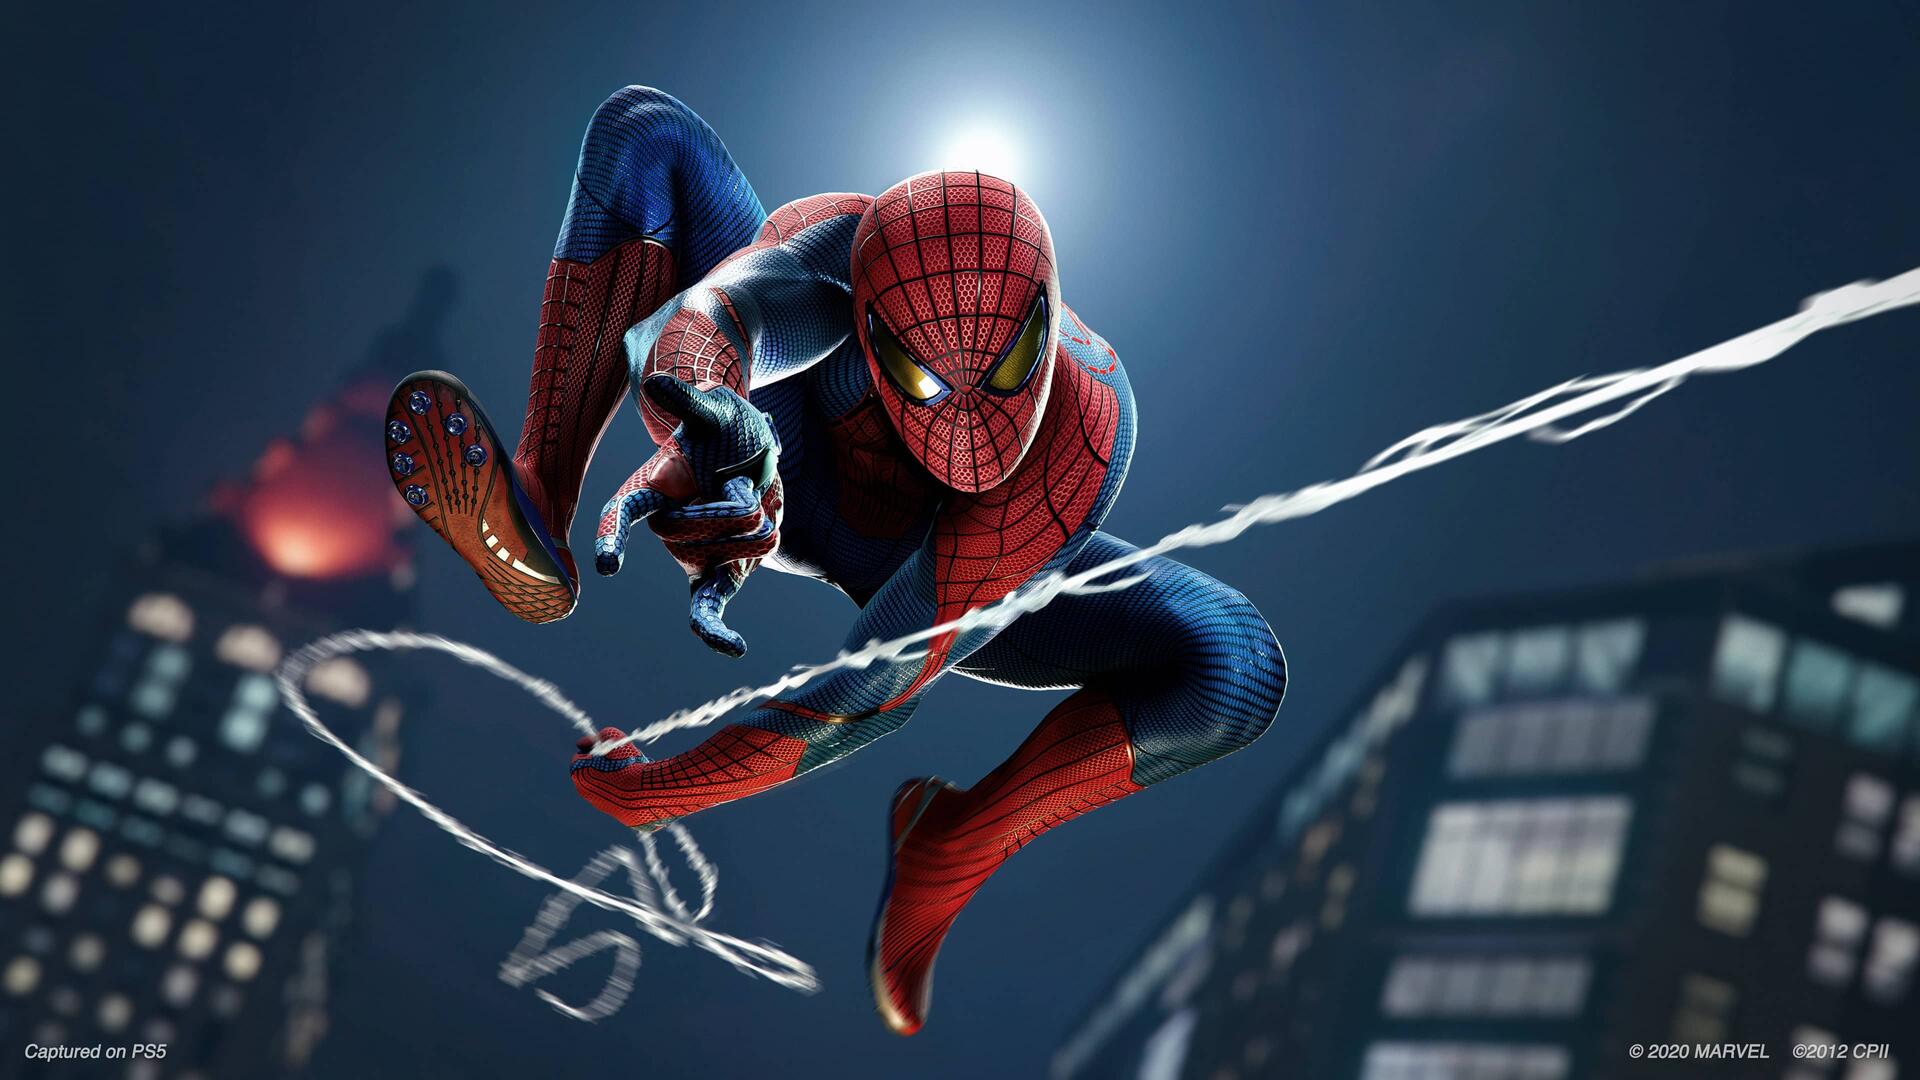 Marvel’s Avengers' Spider-Man Release Date 2021